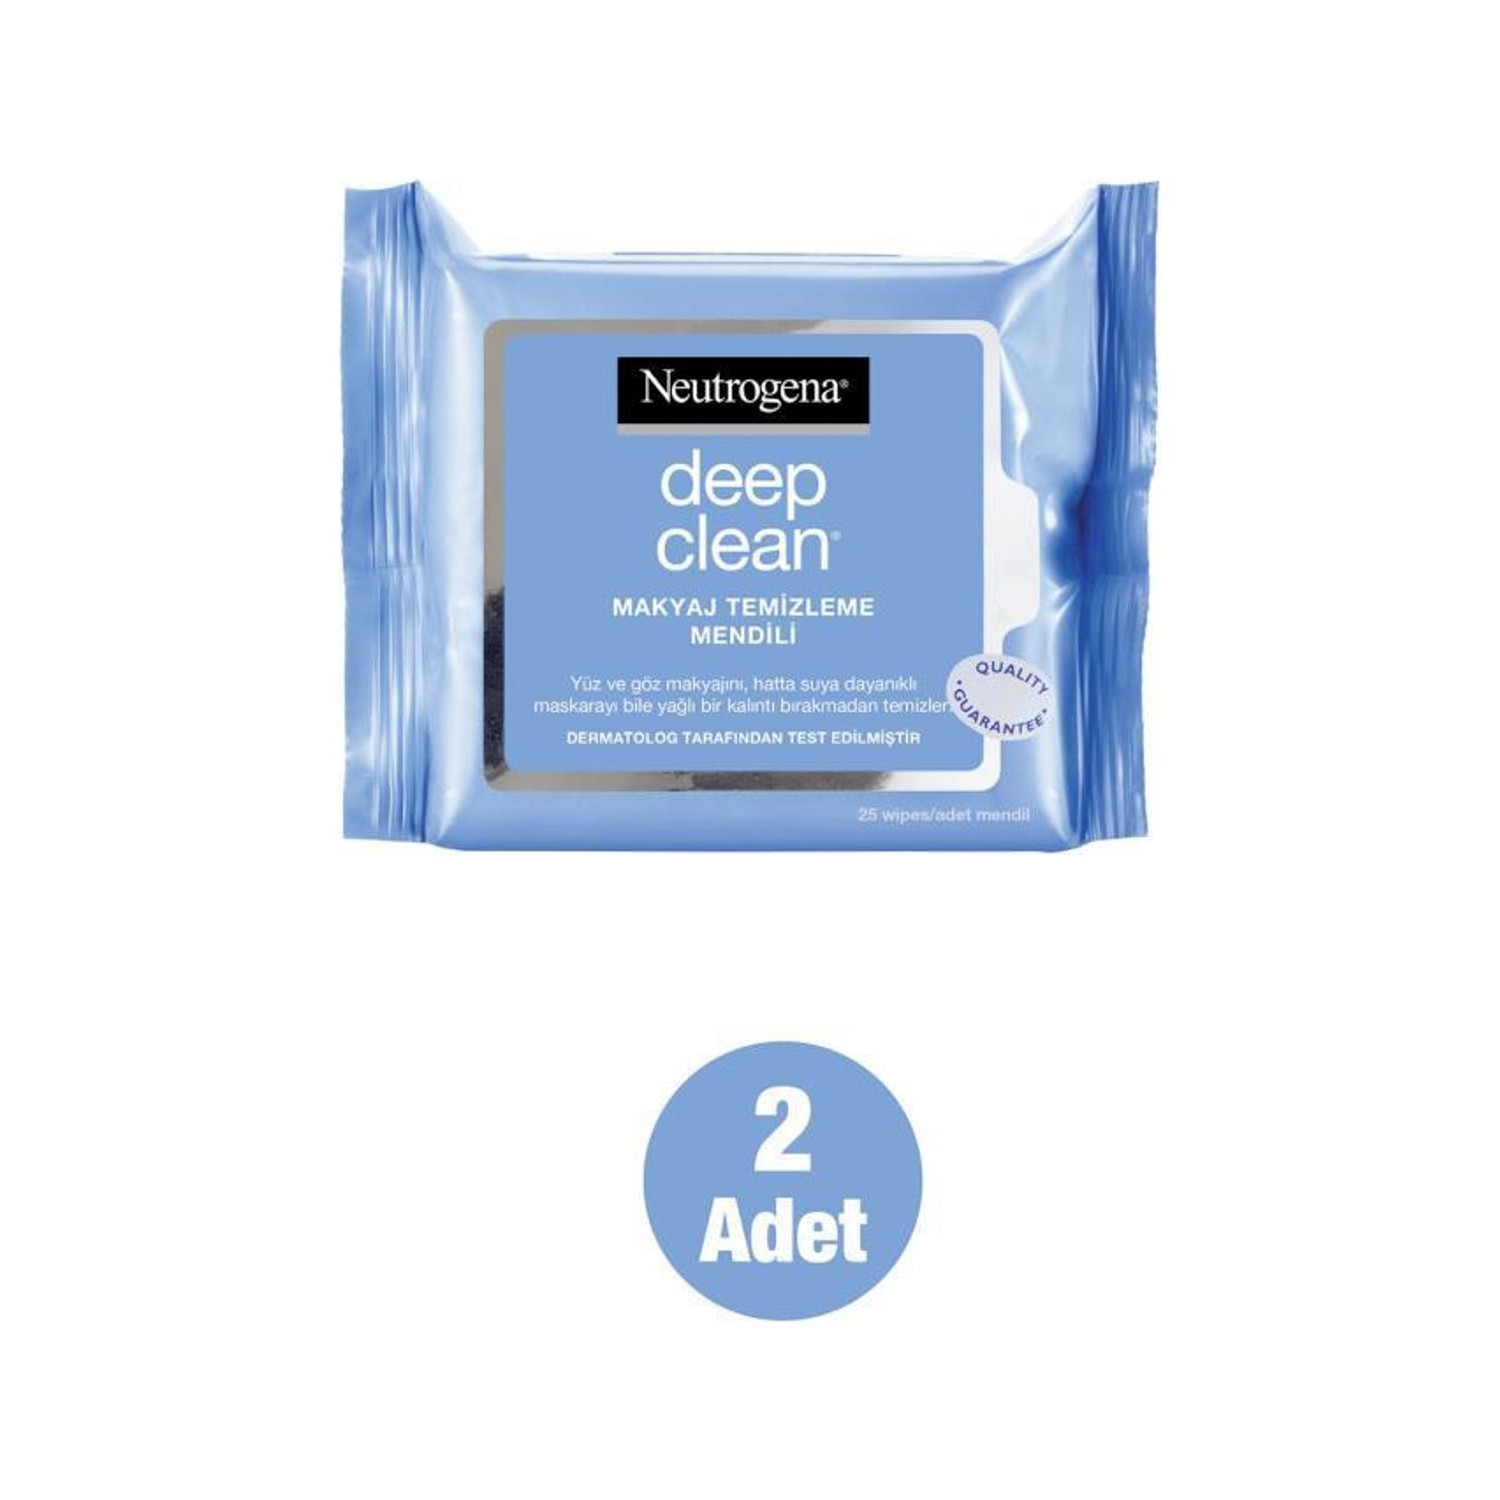 Салфетки для снятия макияжа Neutrogena Deep Clean, 2 упаковки по, 25 салфеток салфетки очищающие neutrogena для снятия макияжа 2 упаковки по 25 салфеток